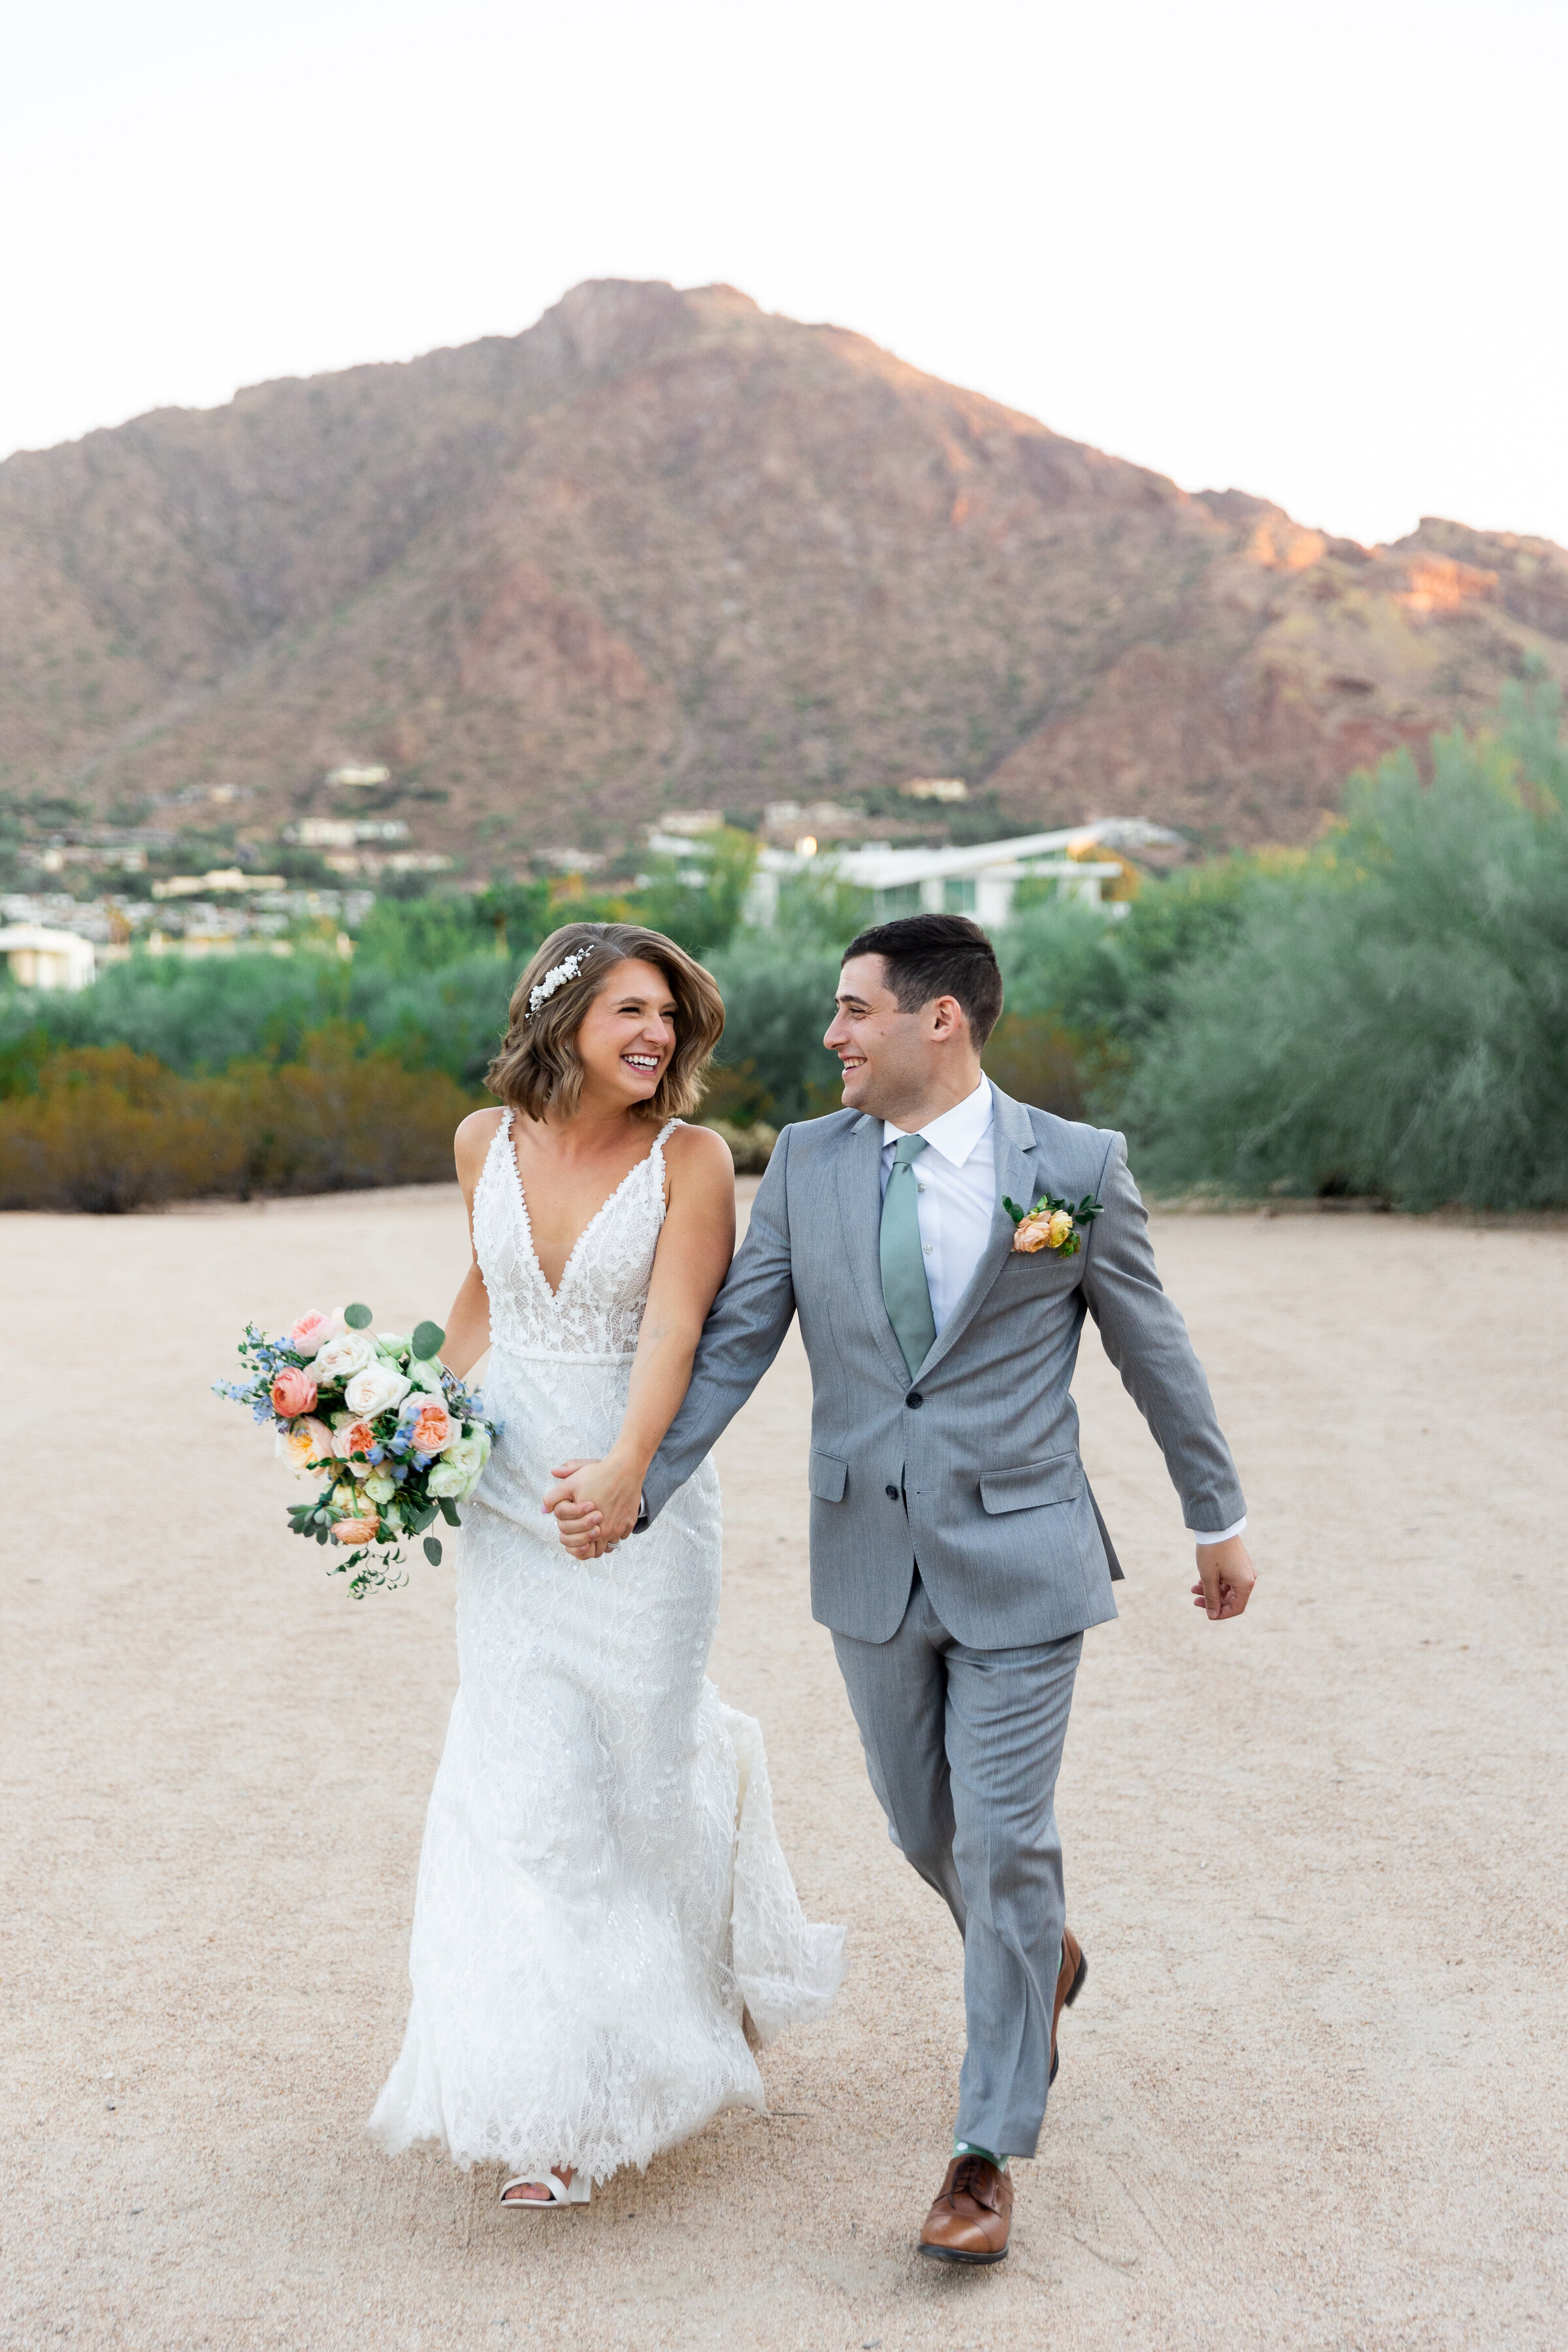 Karlie Colleen Photography - Emily & Mike - Wedding Sneak Peek - El Chorro - Arizona - Revel Wedding Co-339